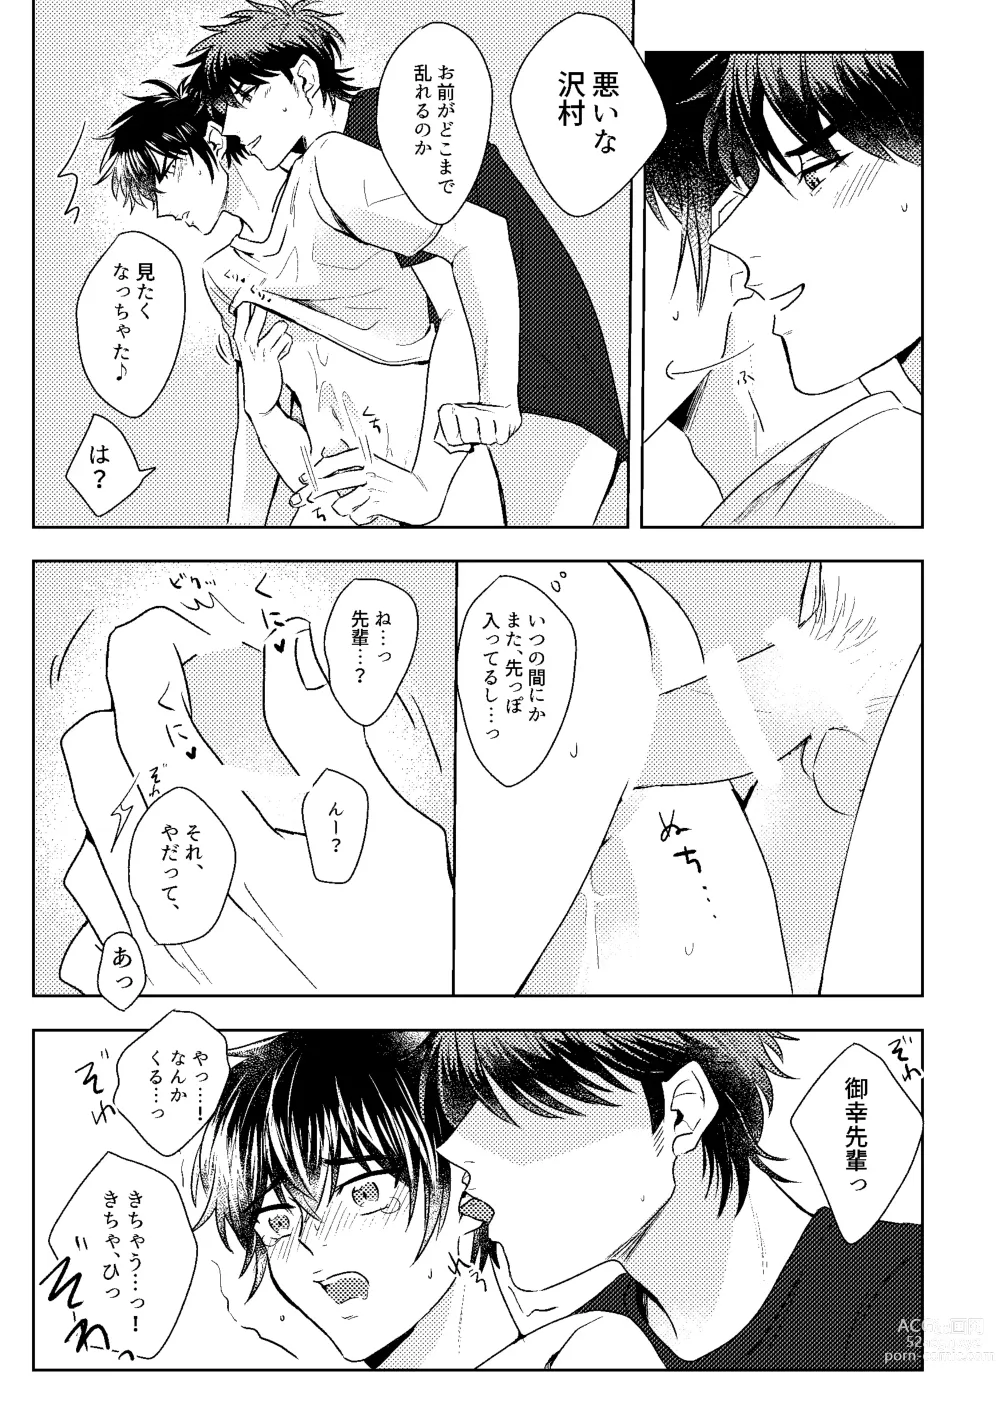 Page 49 of doujinshi Hatsukoi Sparkle